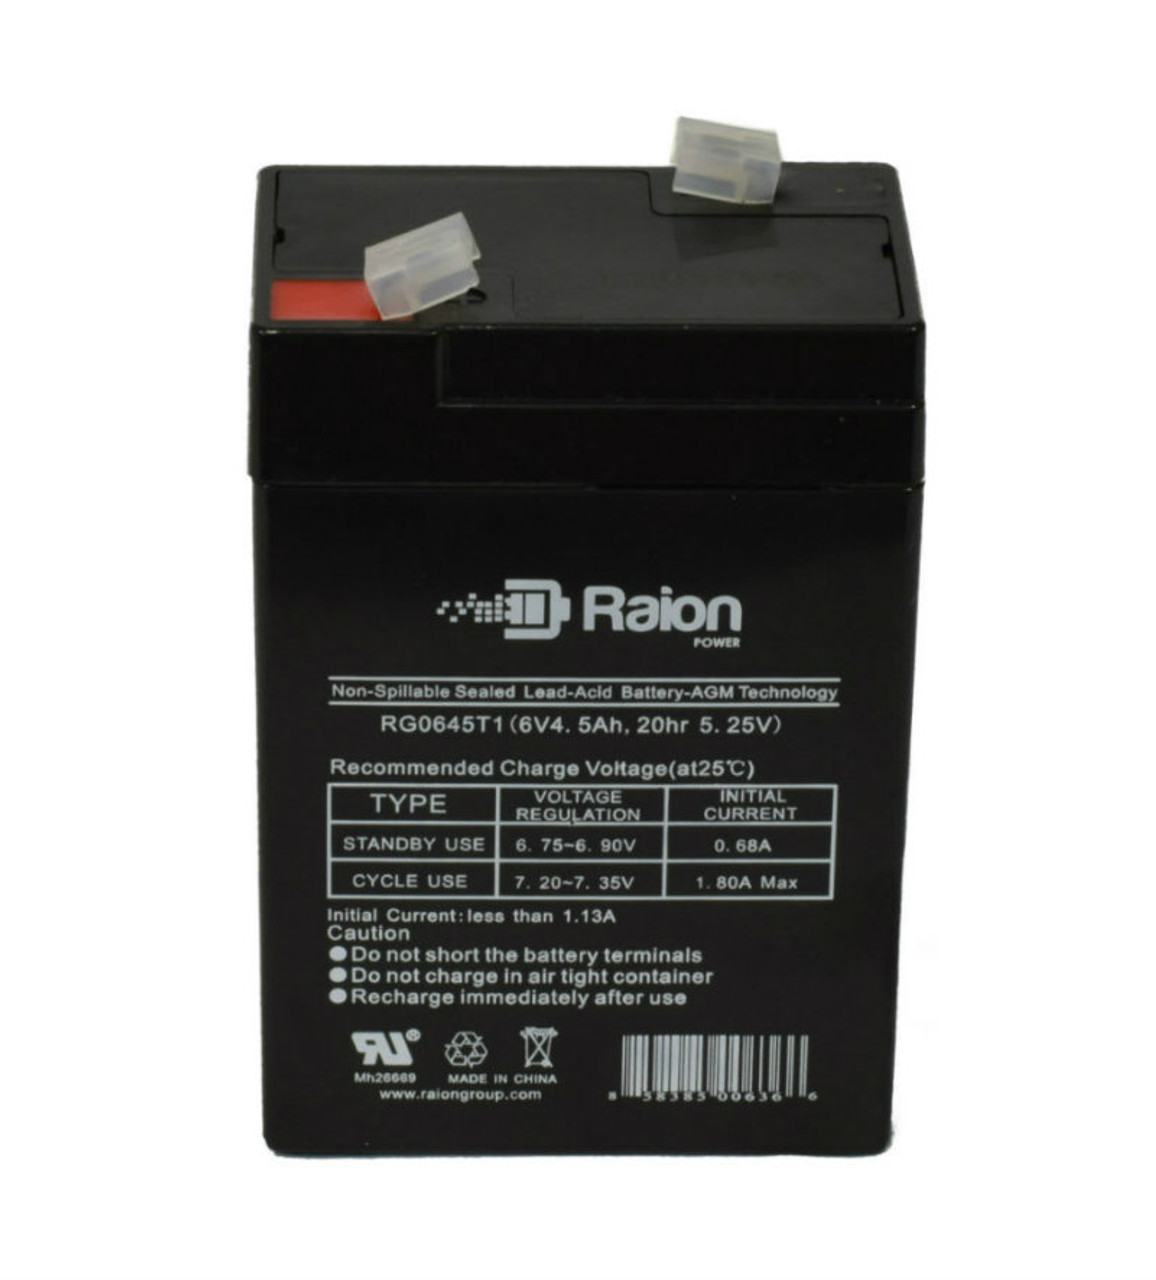 Raion Power RG0645T1 Replacement Battery Cartridge for Q-Batteries 6LS-4.5